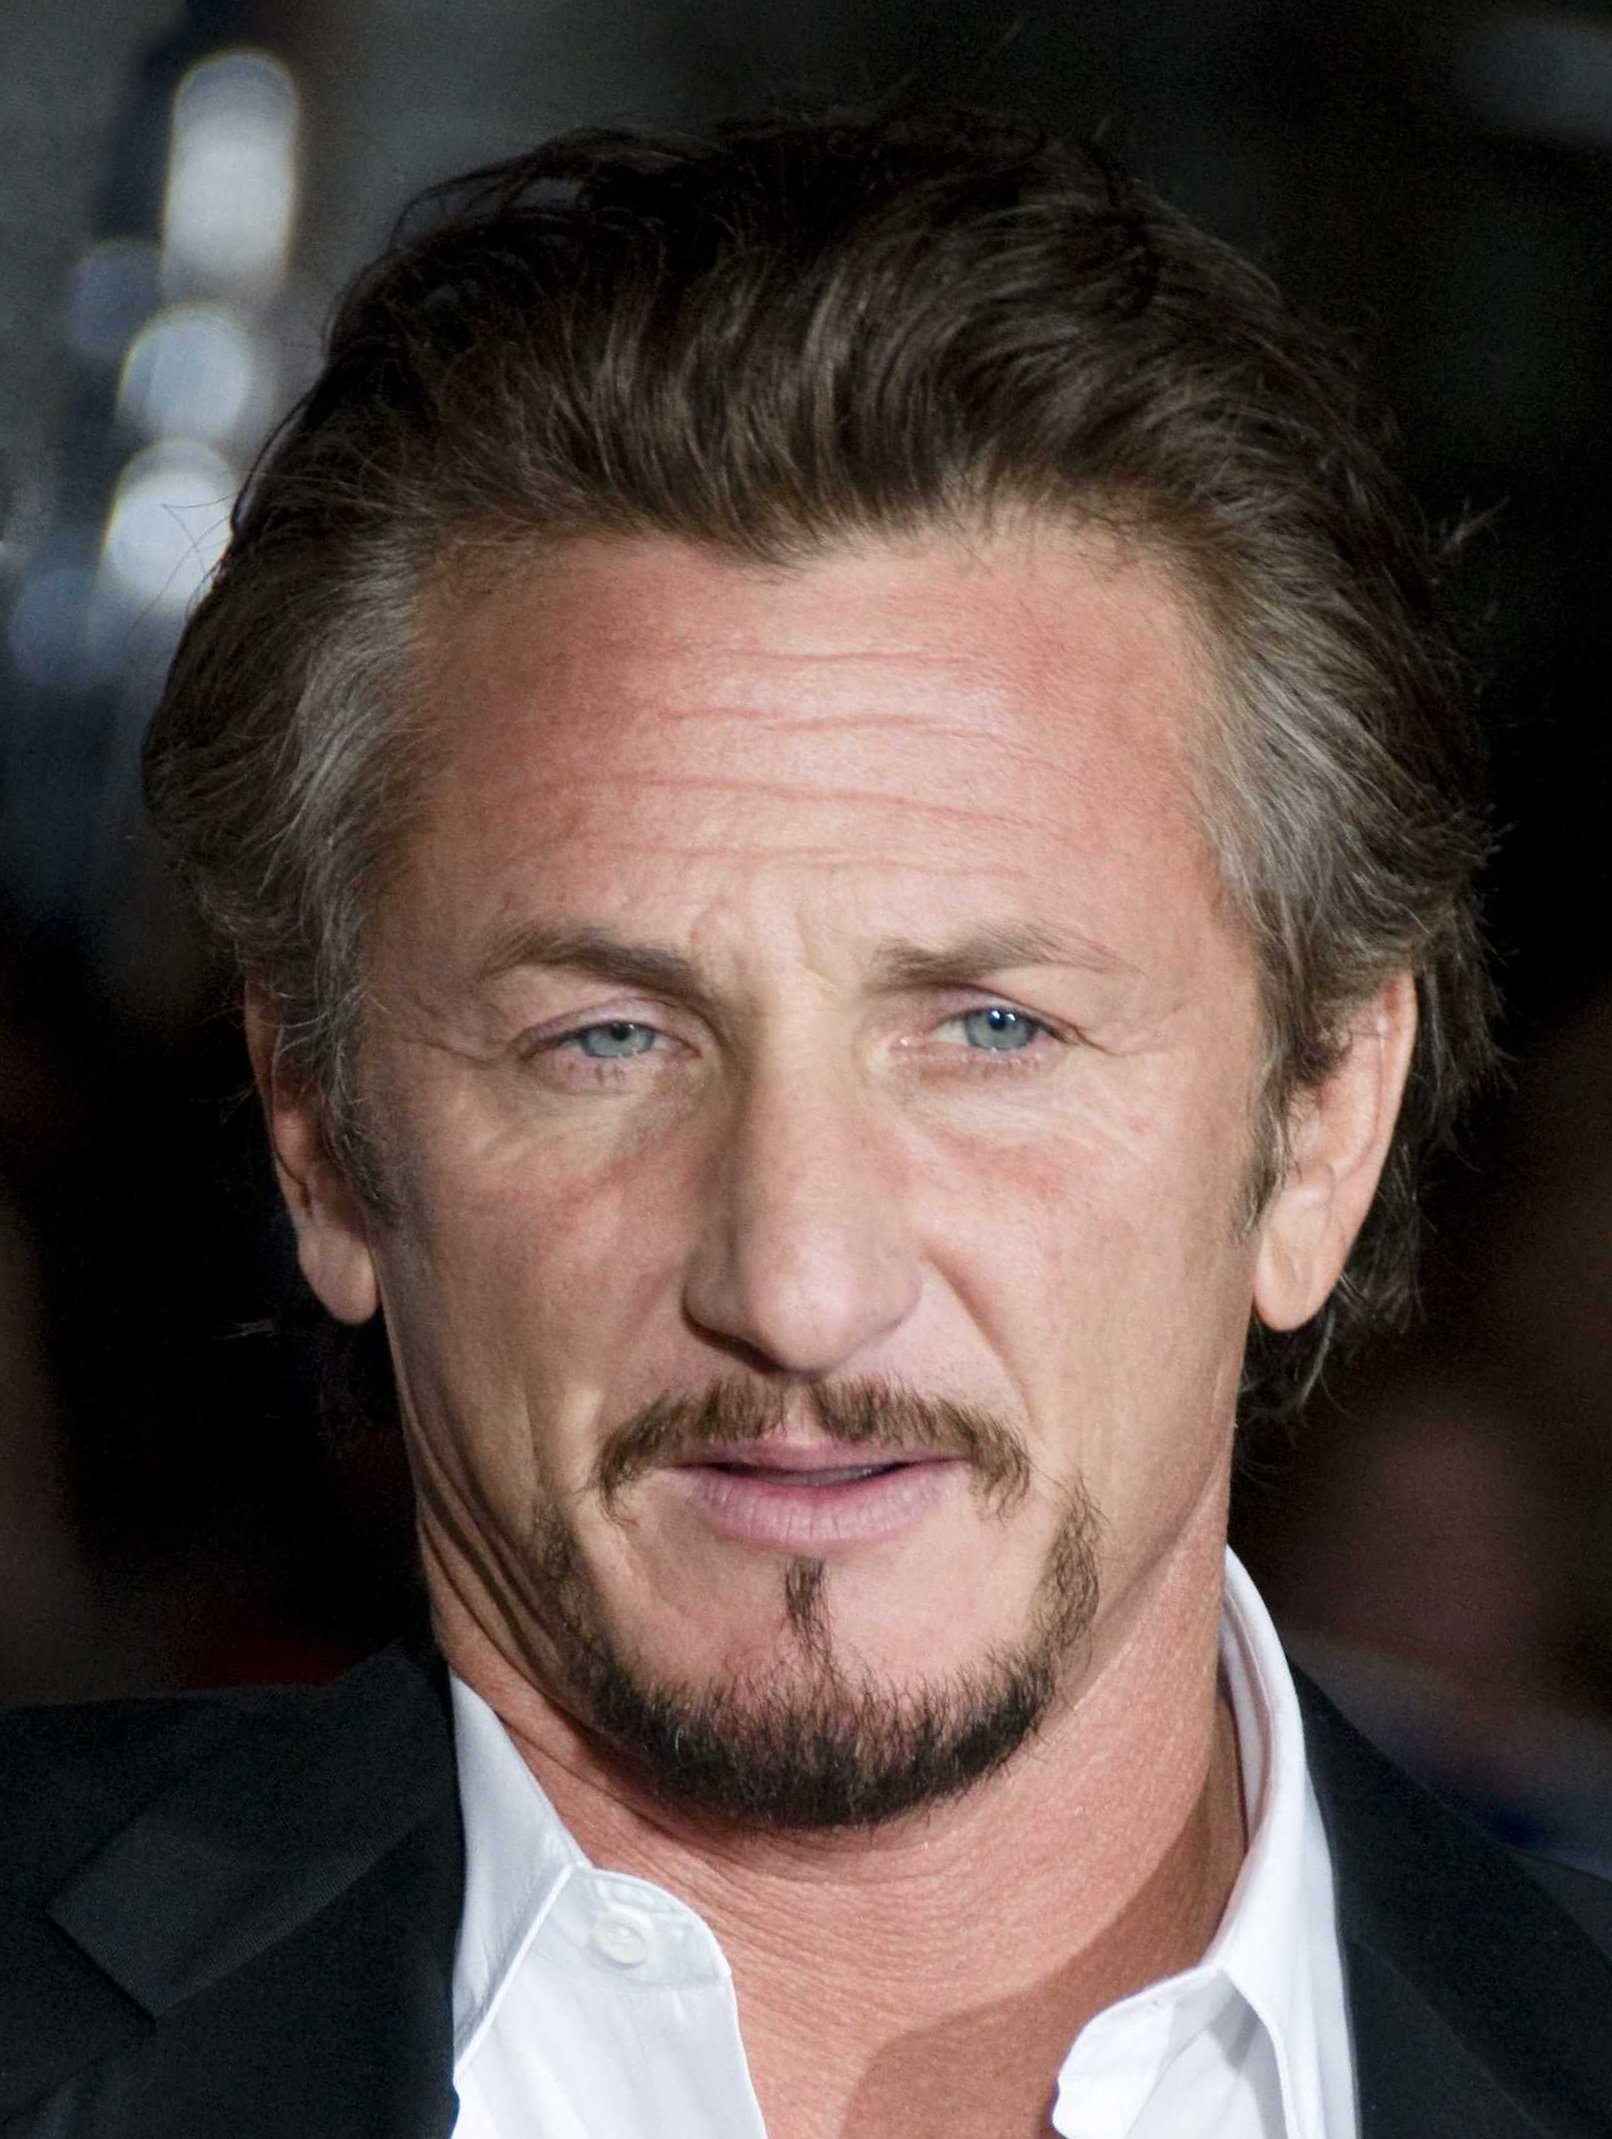 Sean Penn, Oscars Wiki